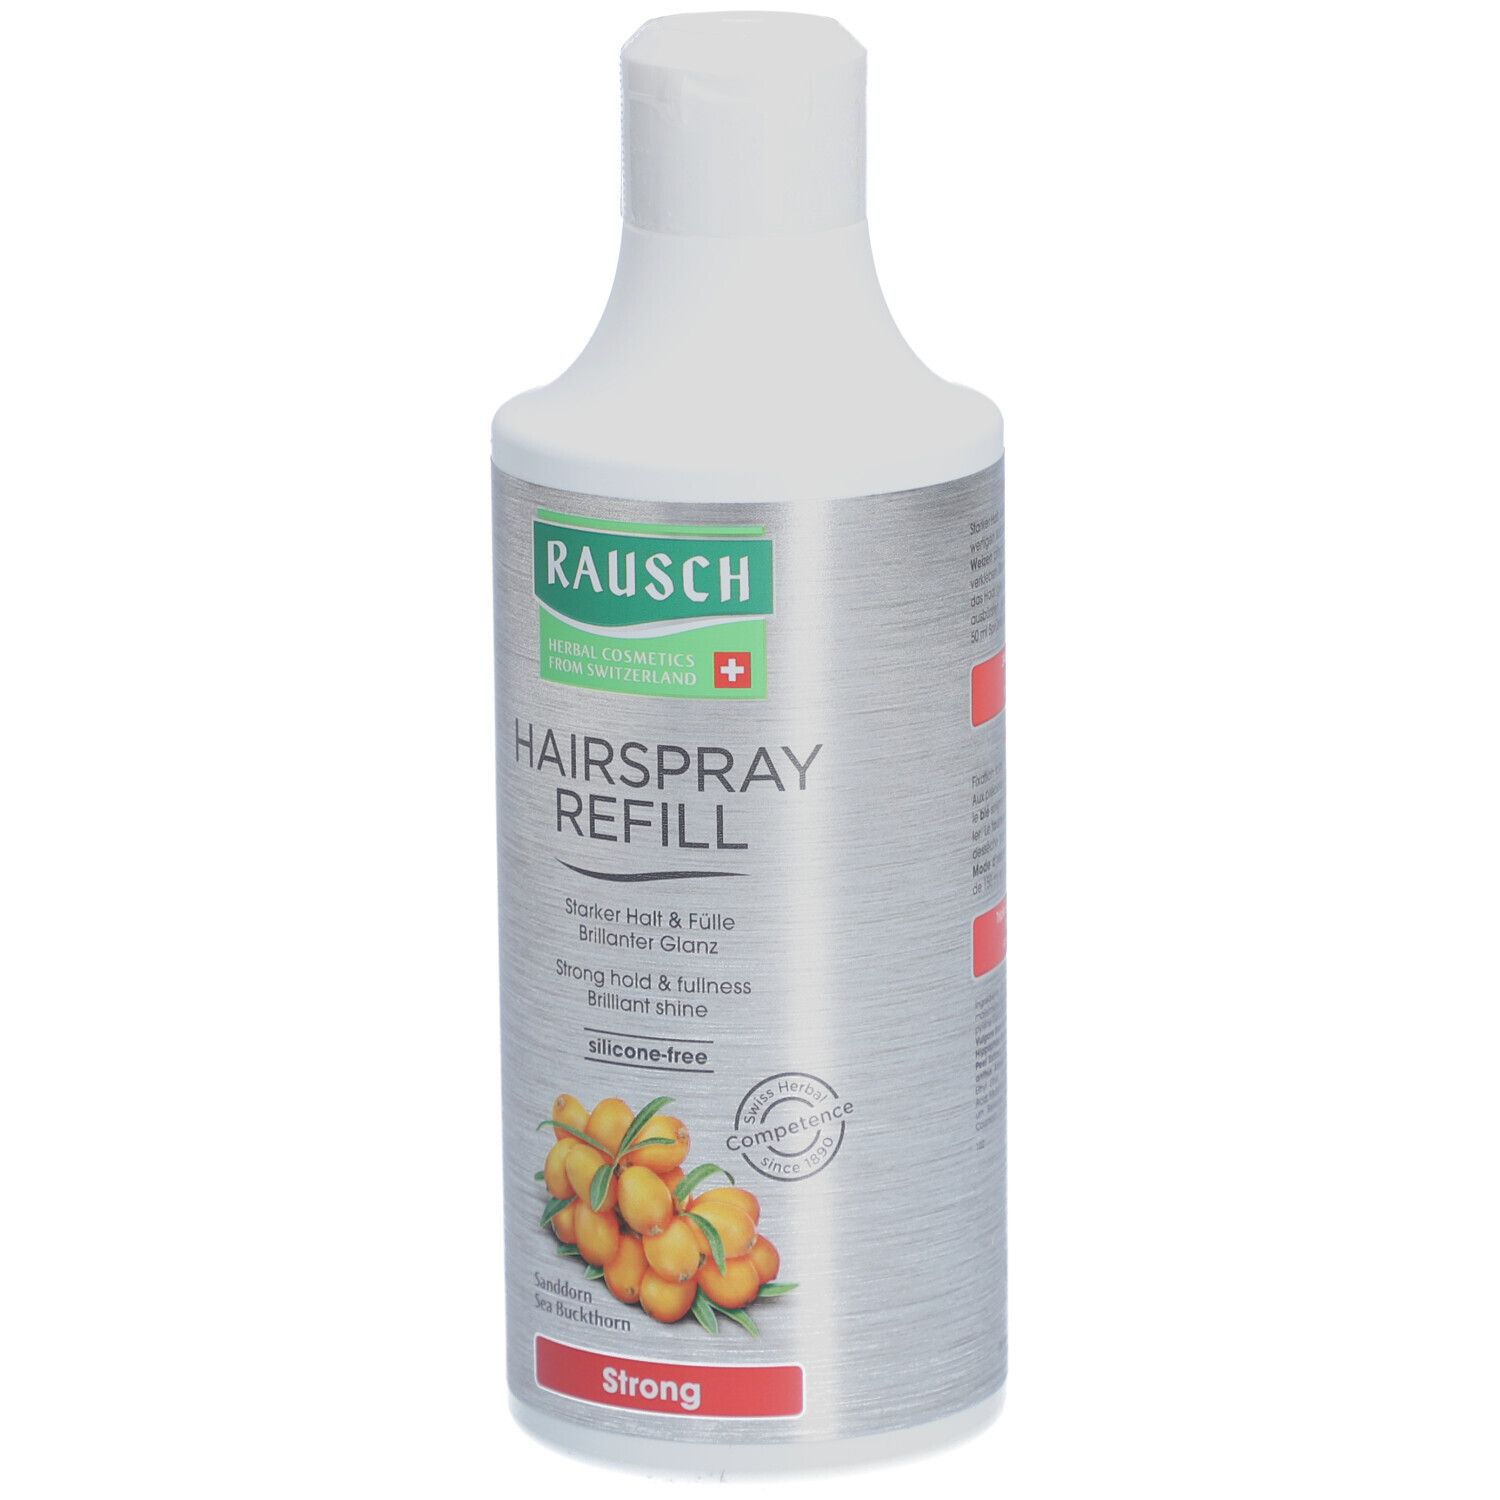 RAUSCH Hairspray Strong Refill Non-Aerosol